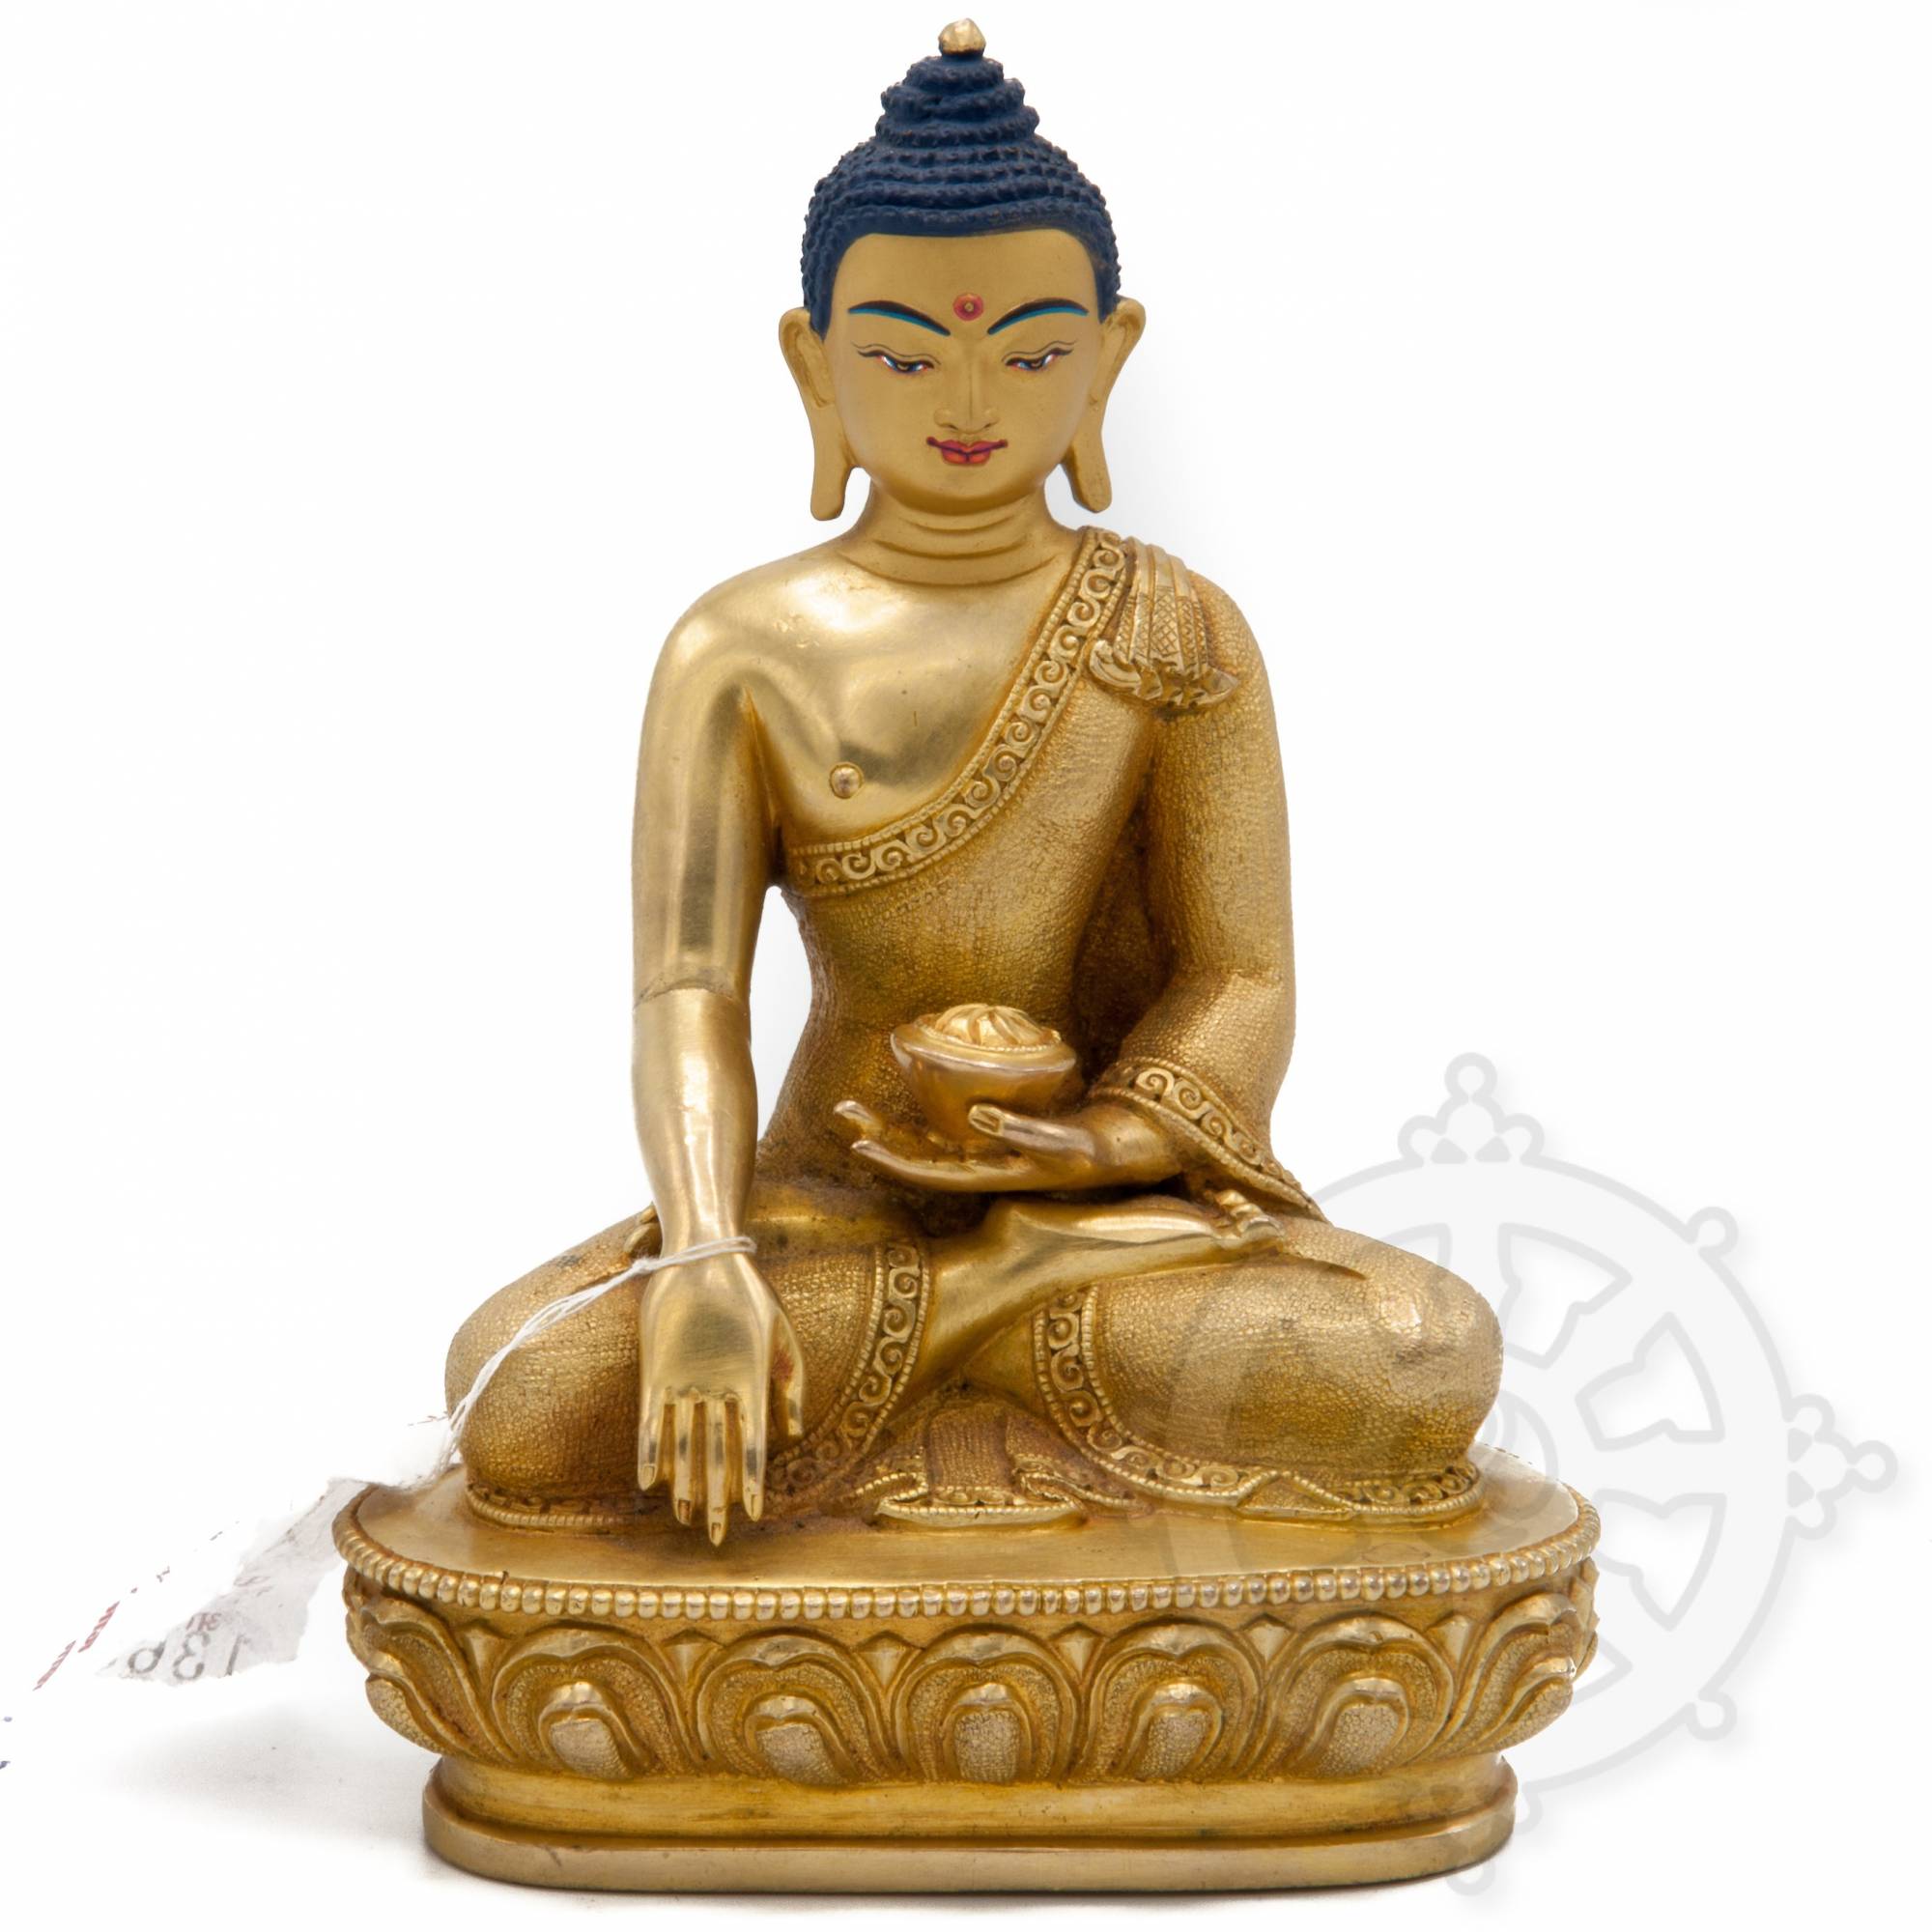 Small LAXMI STATUE ON THRONE 6 cm High Himalayan Buddha Yoga Meditation India 